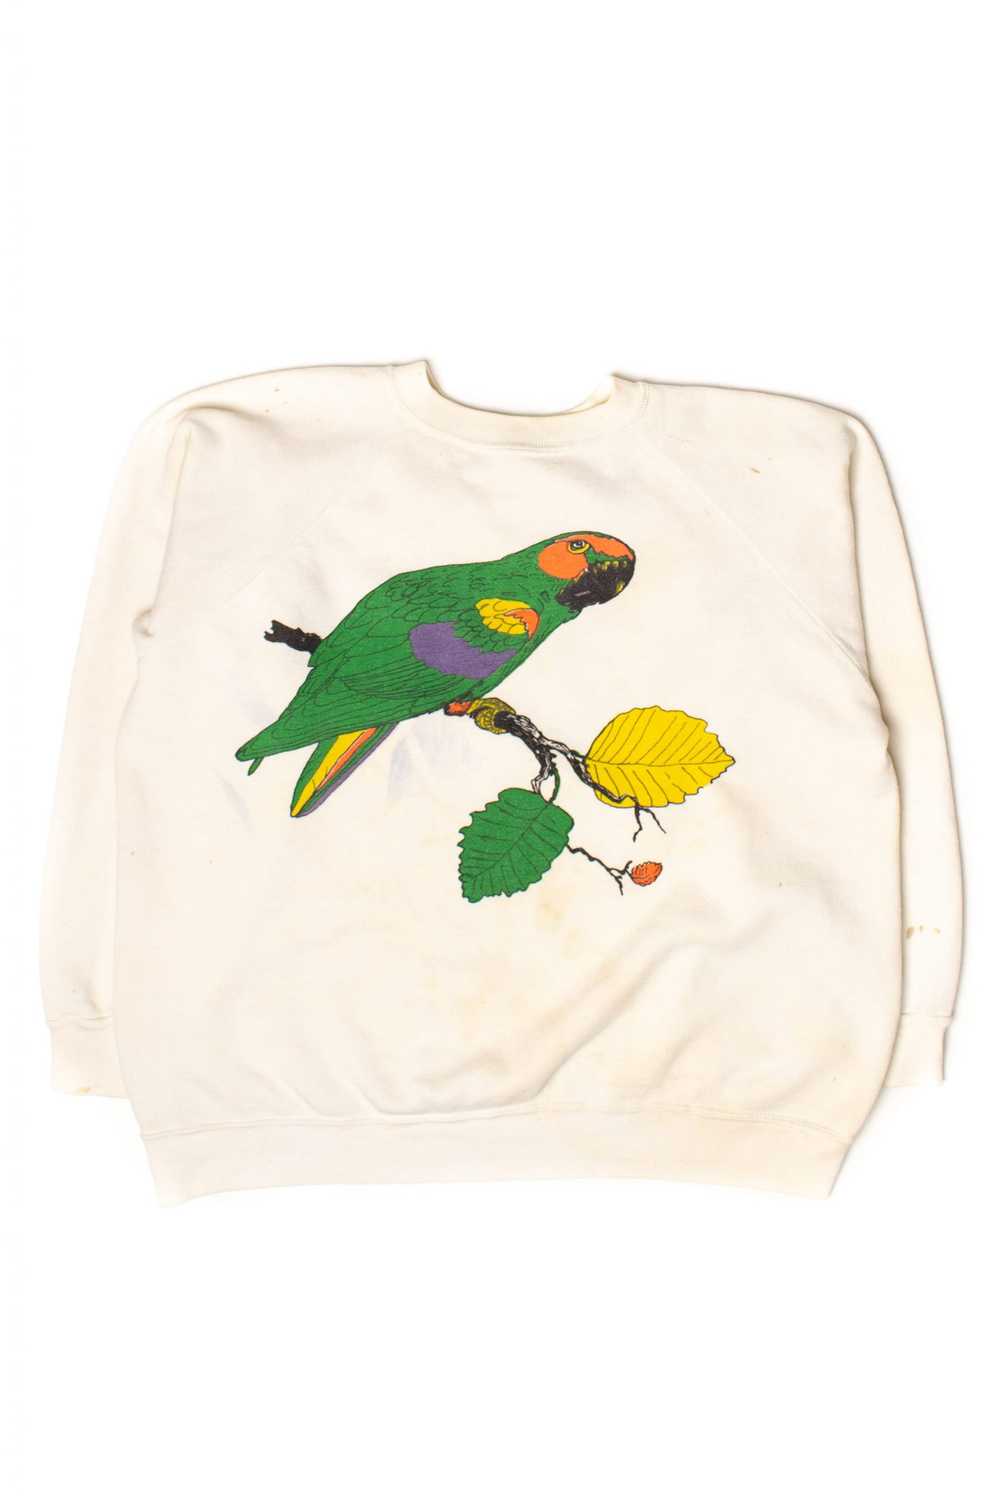 Vintage Parrot On A Branch Sweatshirt (1980s) - image 3